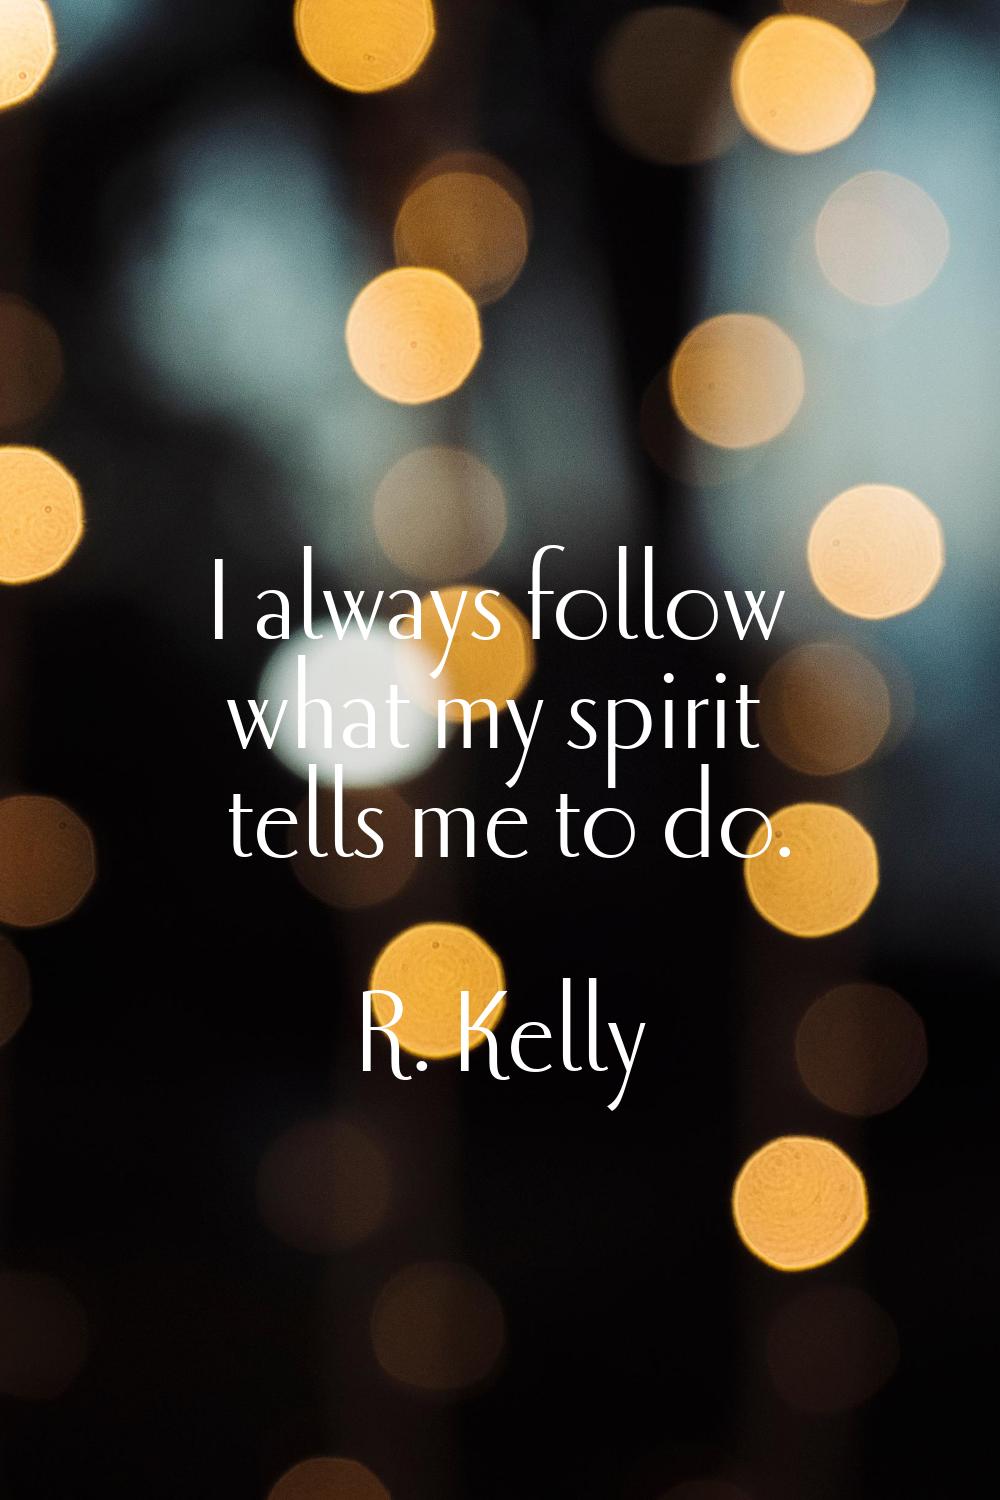 I always follow what my spirit tells me to do.